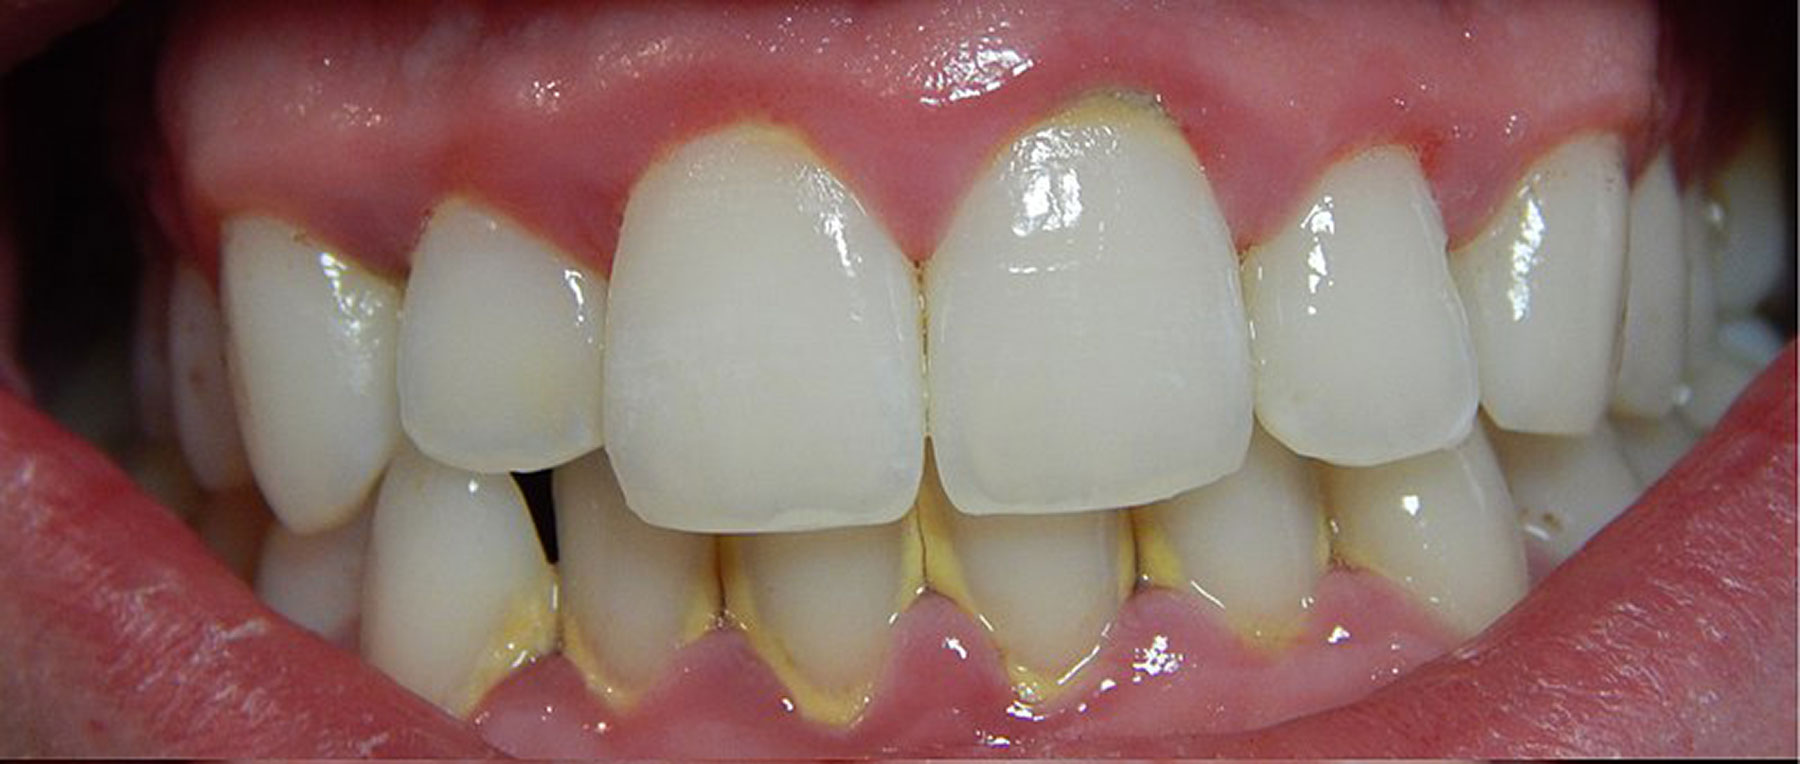 aldente dentistry